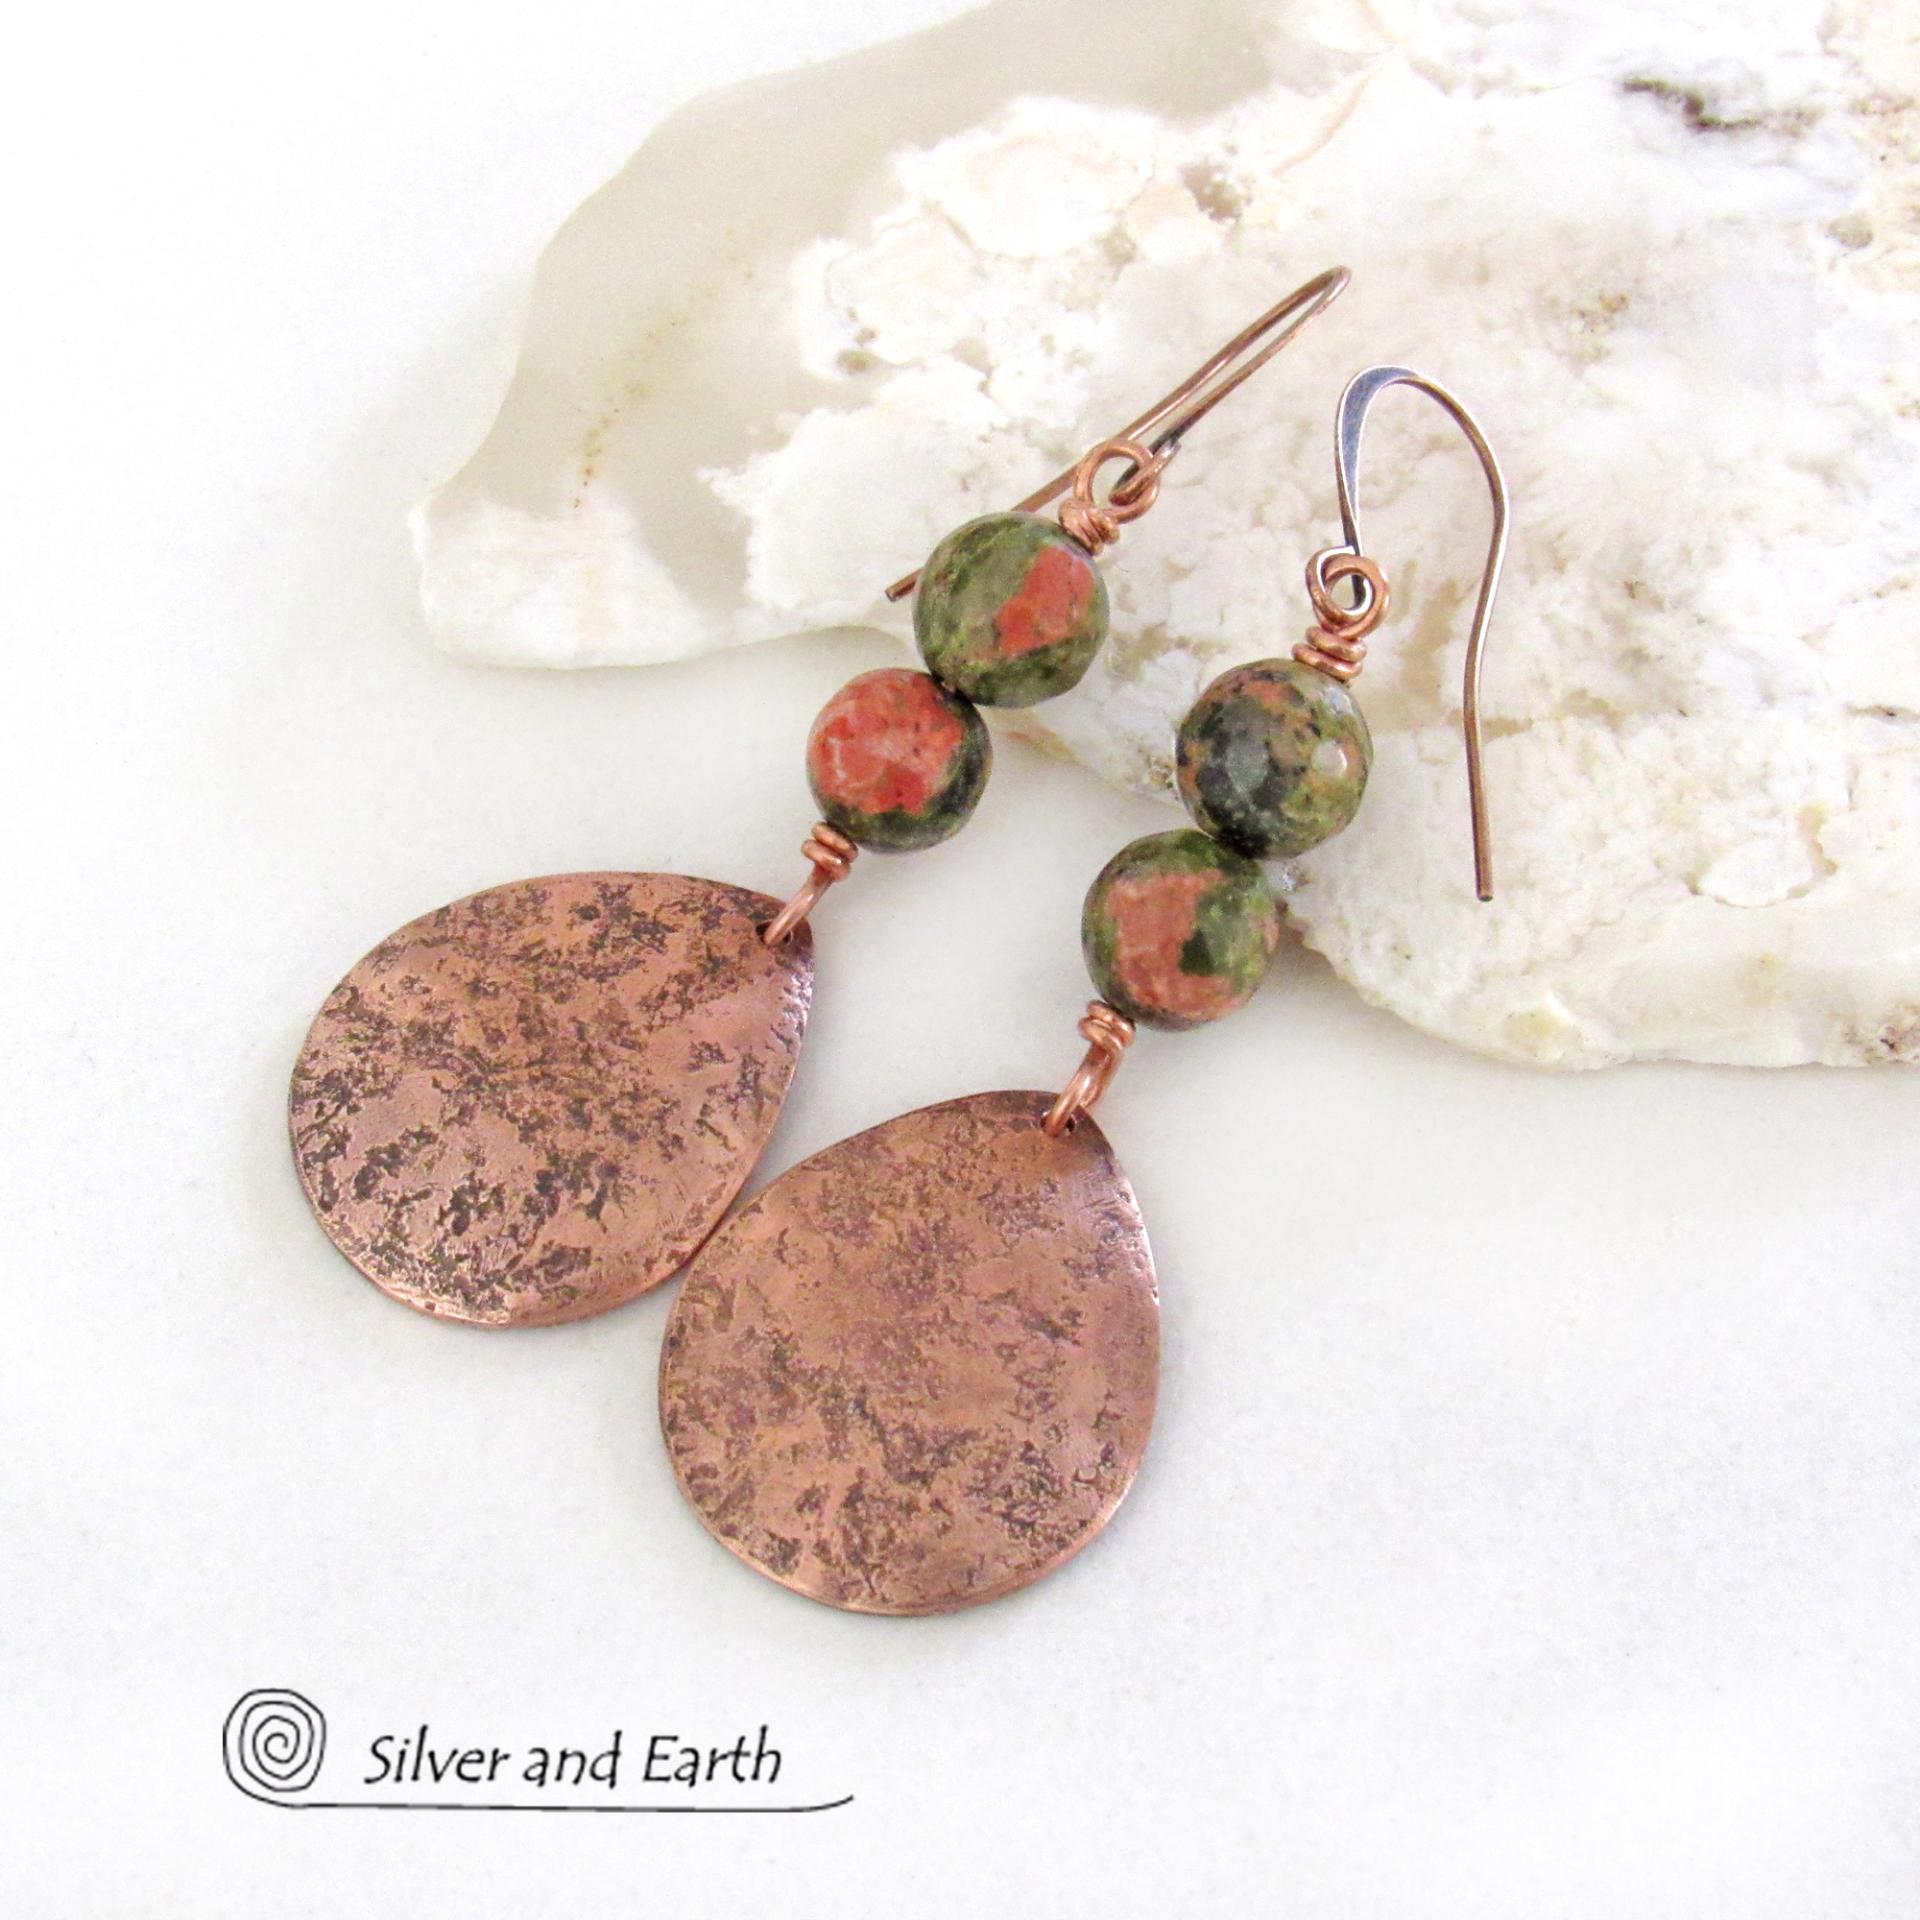 Unakite Pink Green Gemstone Earrings with Copper Teardrop Dangles - Artisan Handcrafted Copper Metal Jewelry